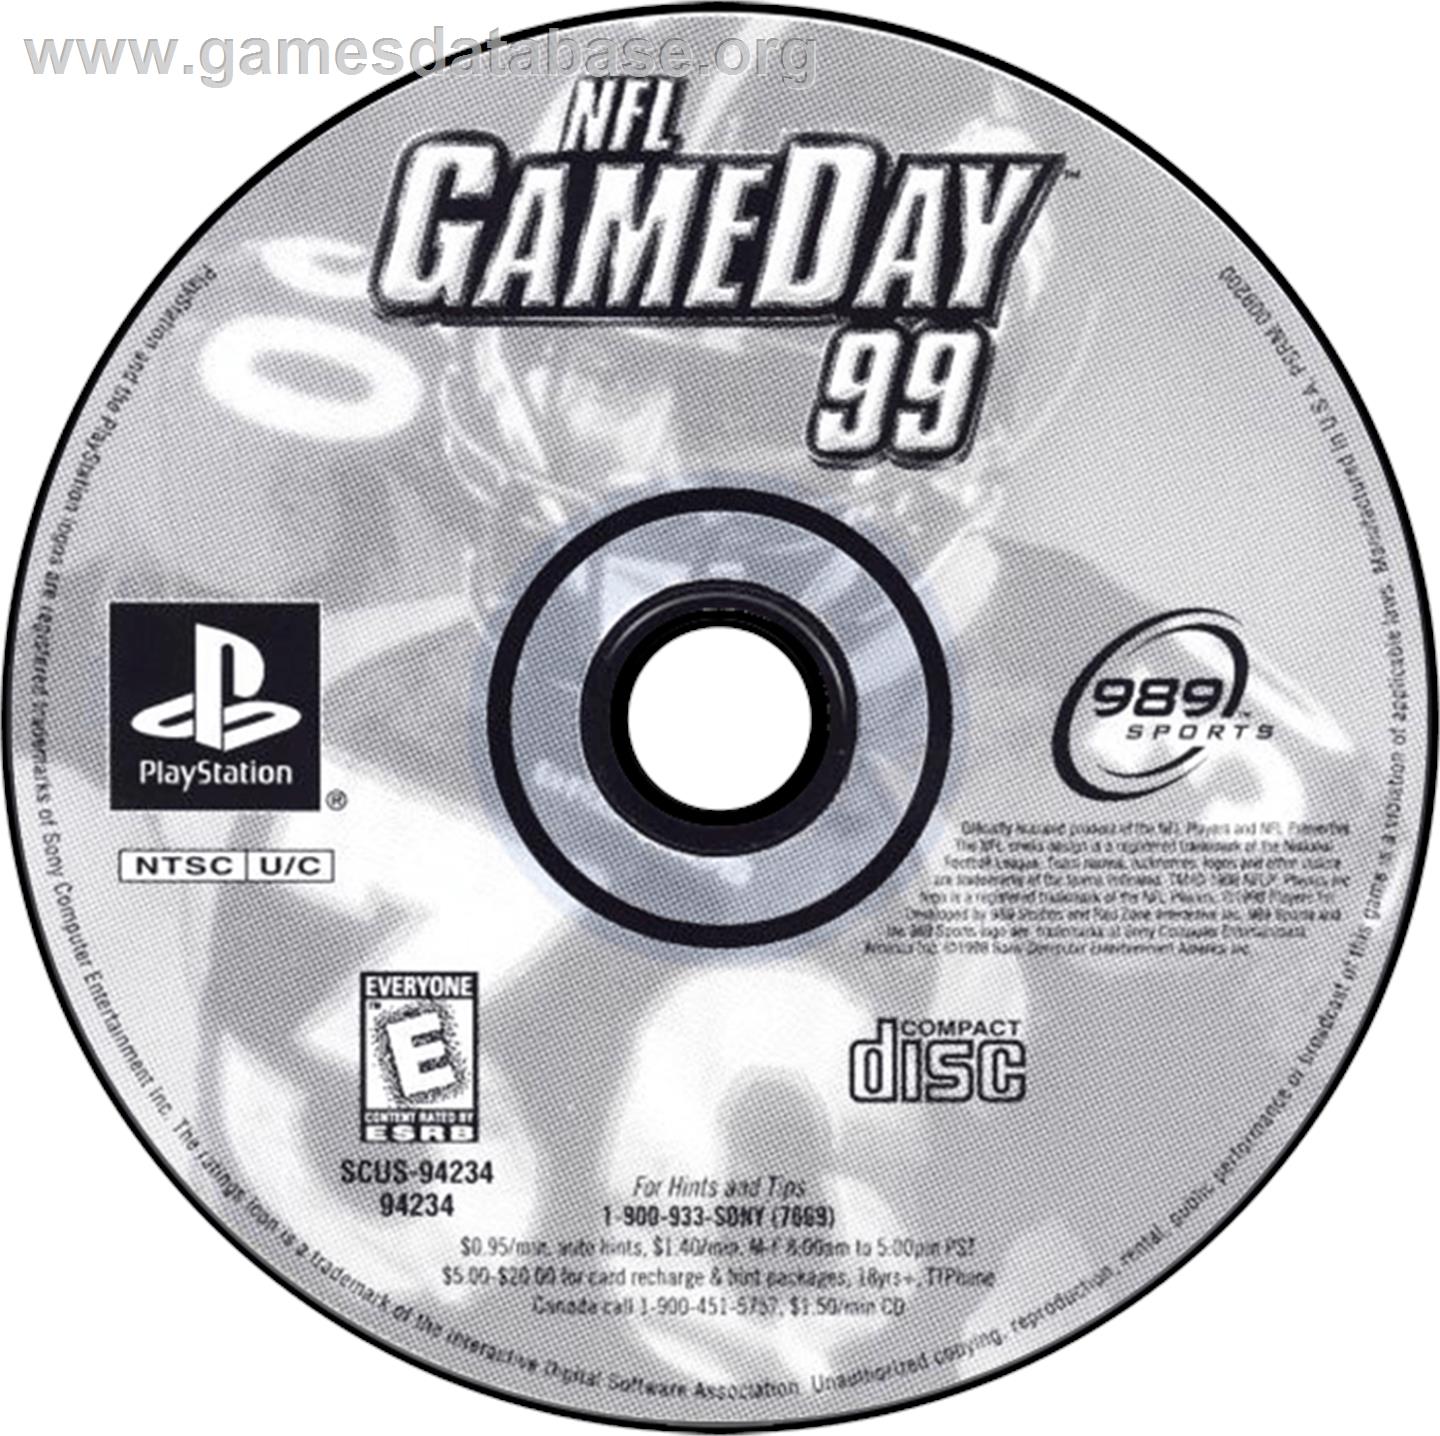 NFL GameDay '99 - Sony Playstation - Artwork - Disc